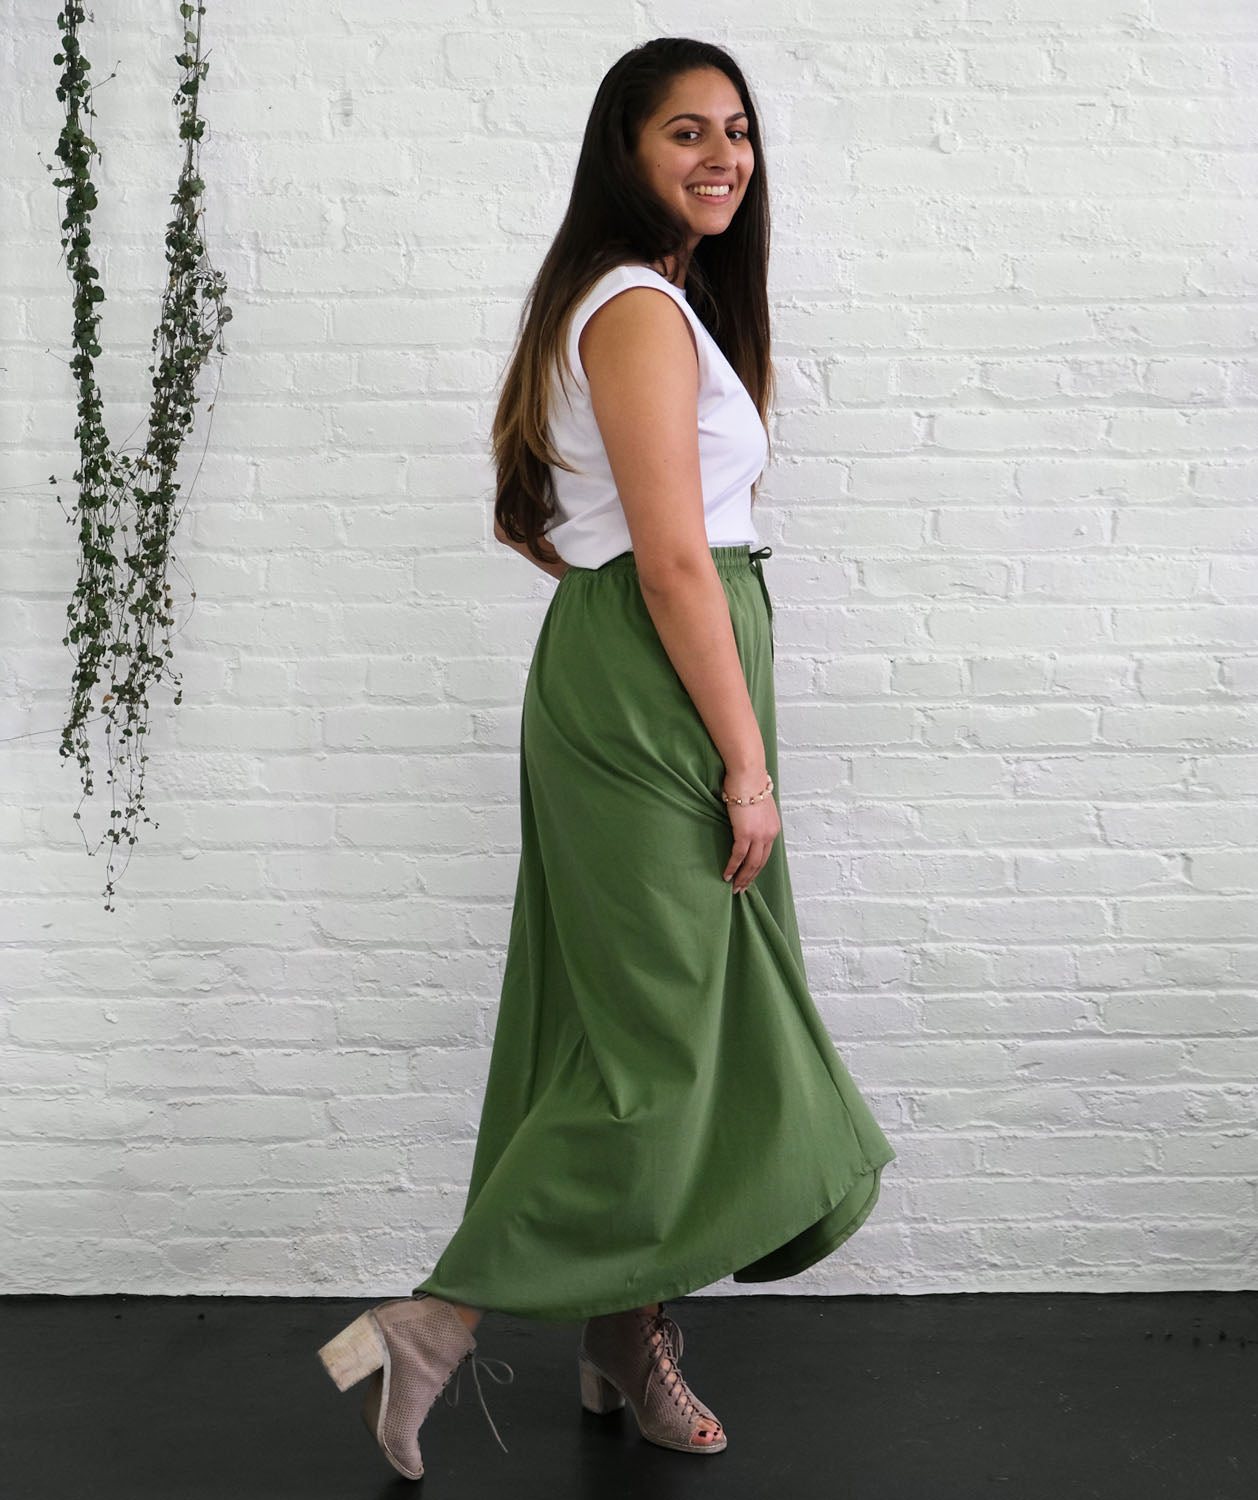 BETH skirt in Vineyard Green